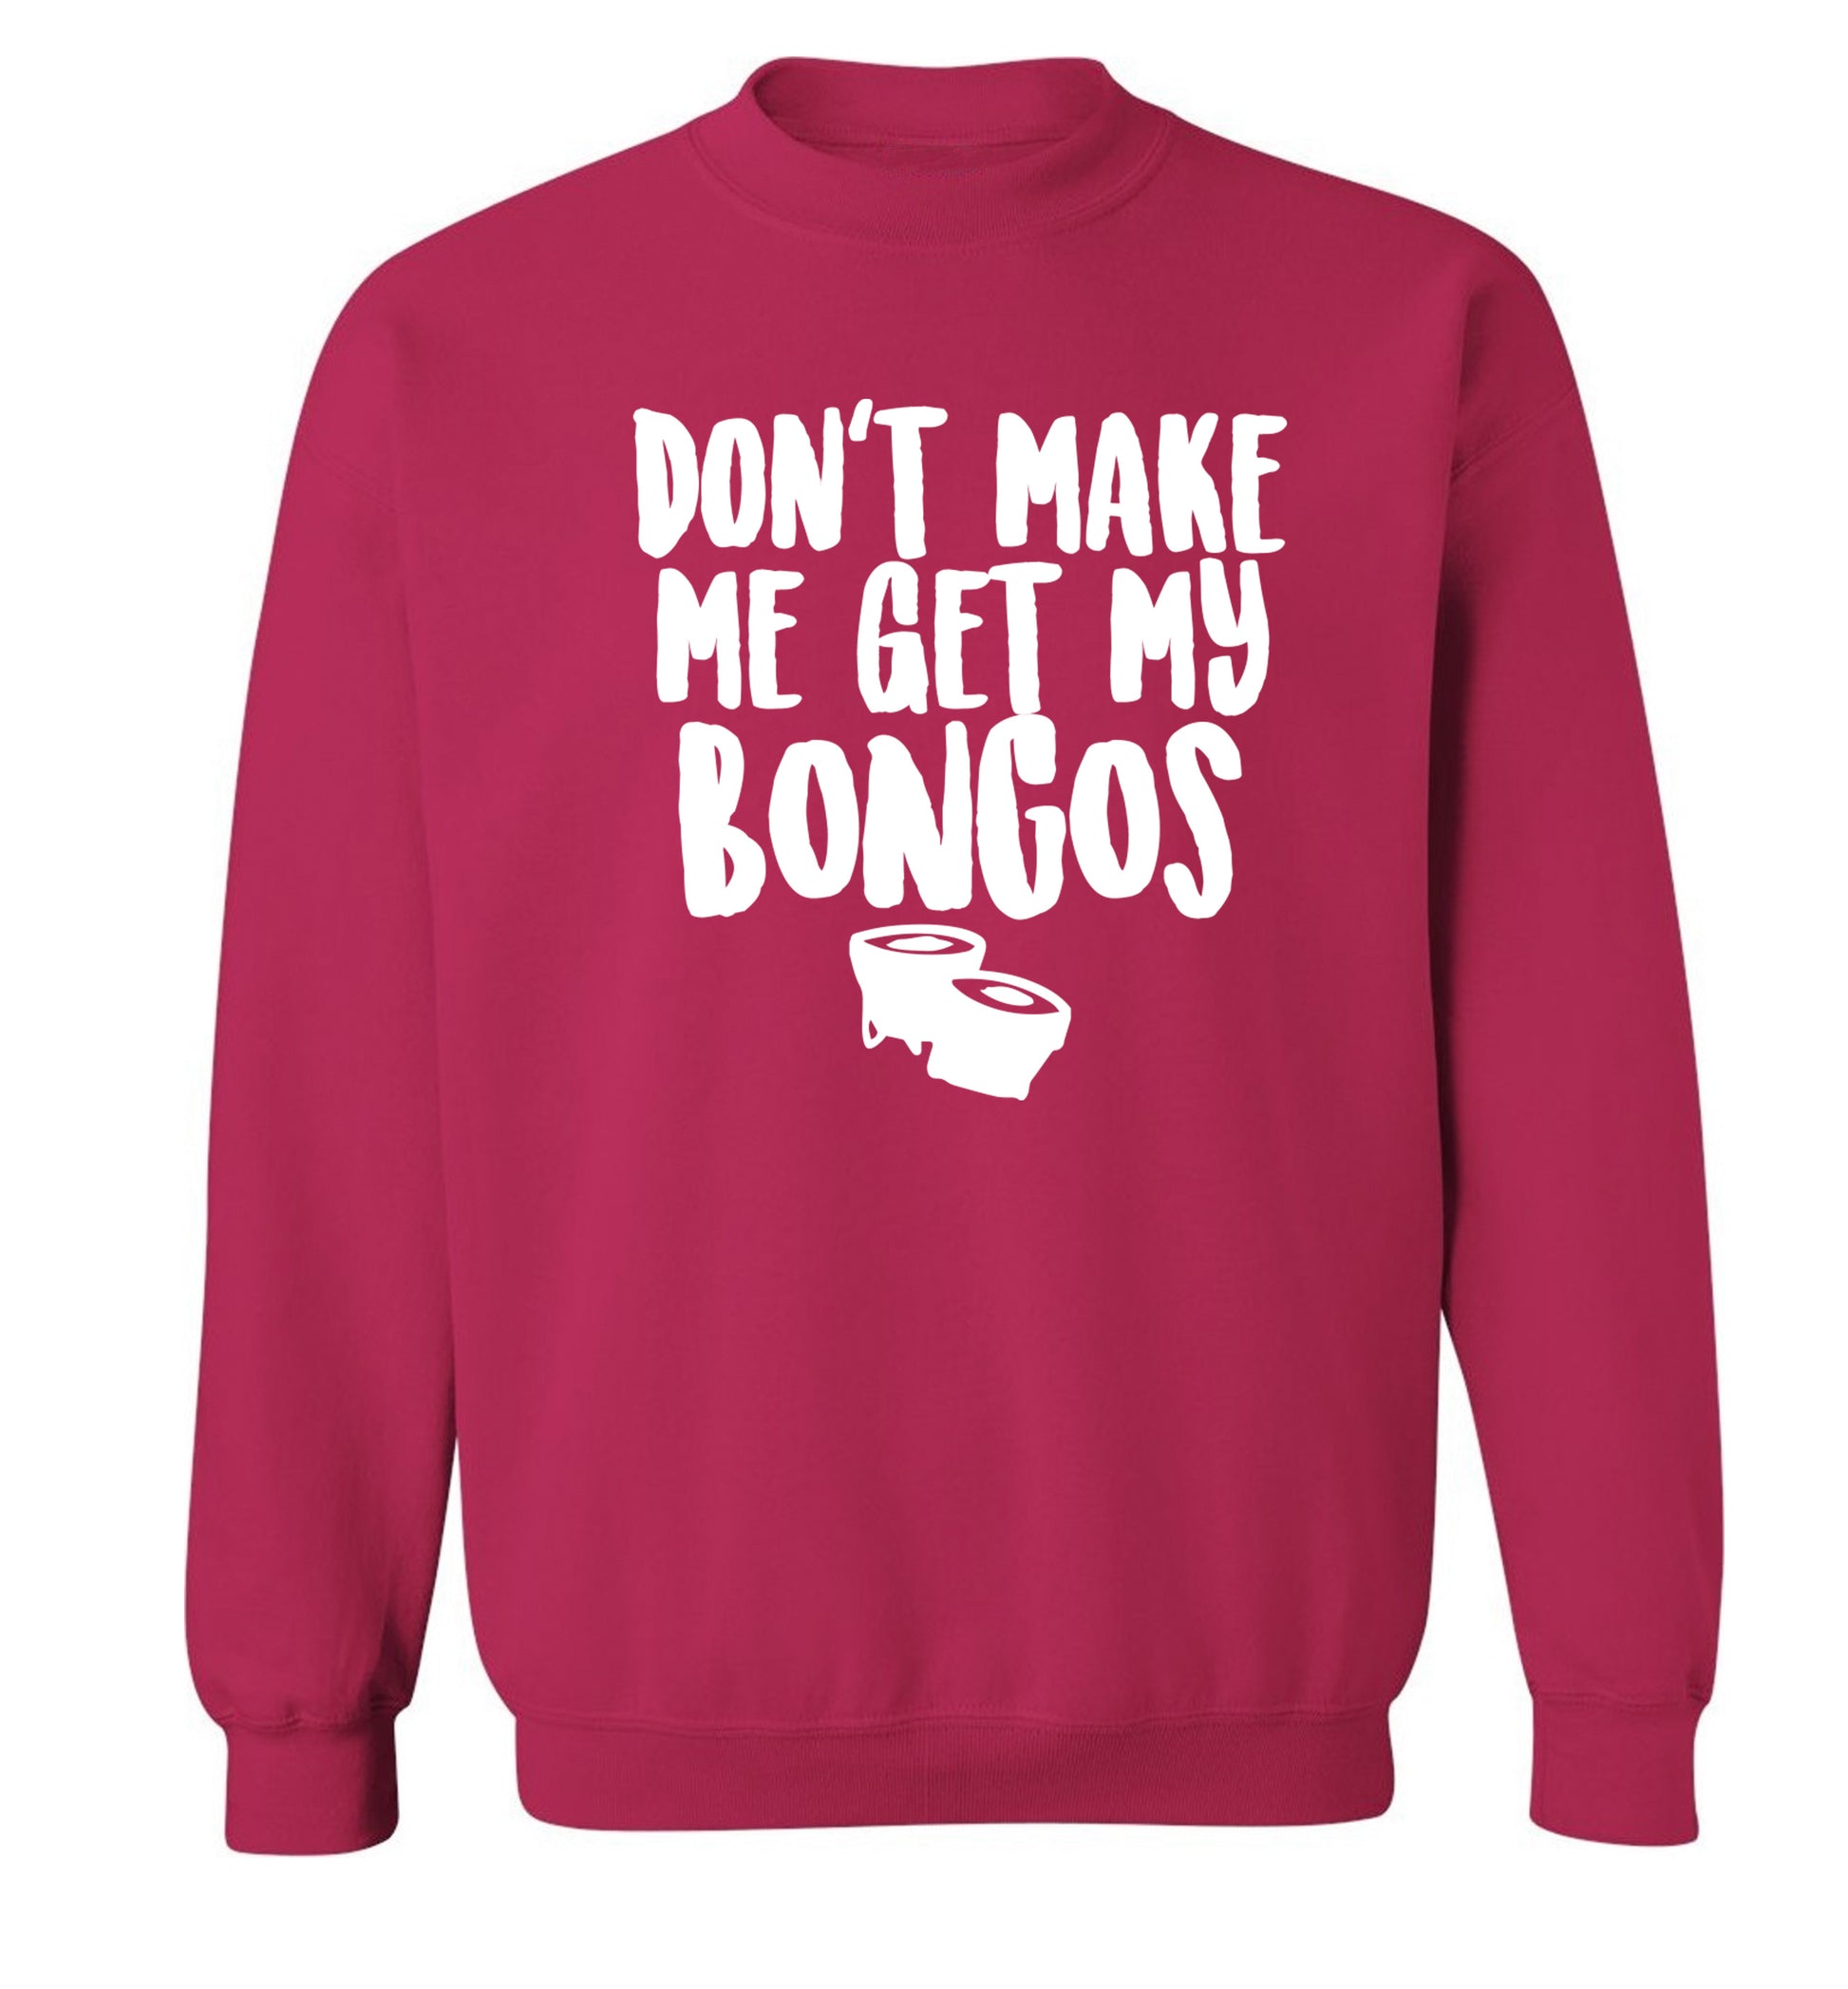 Don't make me get my bongos Adult's unisex pink Sweater 2XL